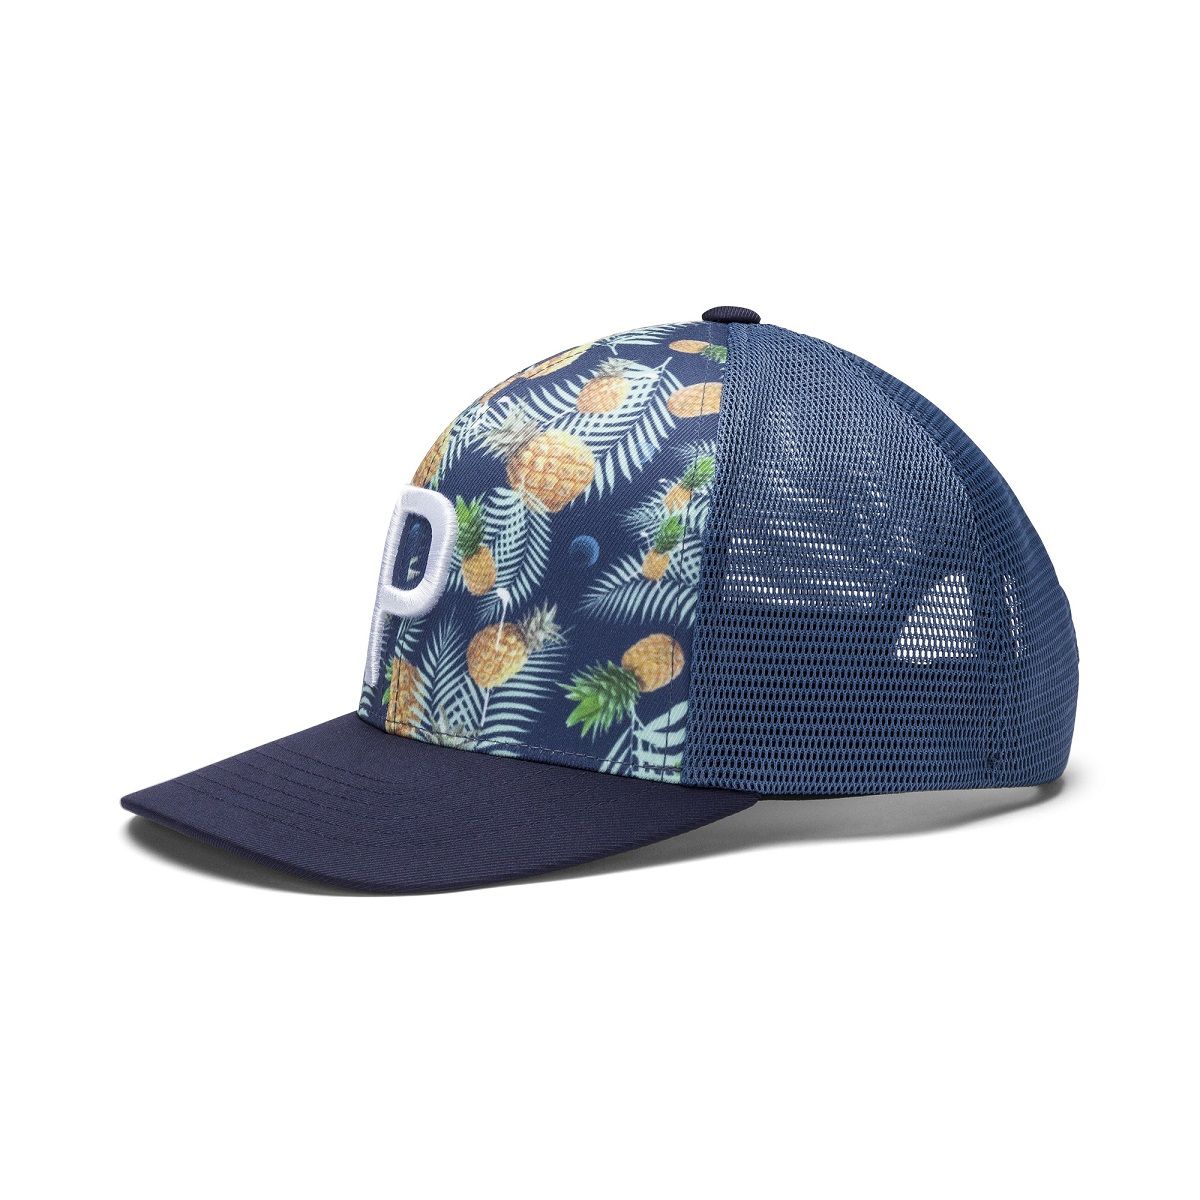 puma pineapple hat